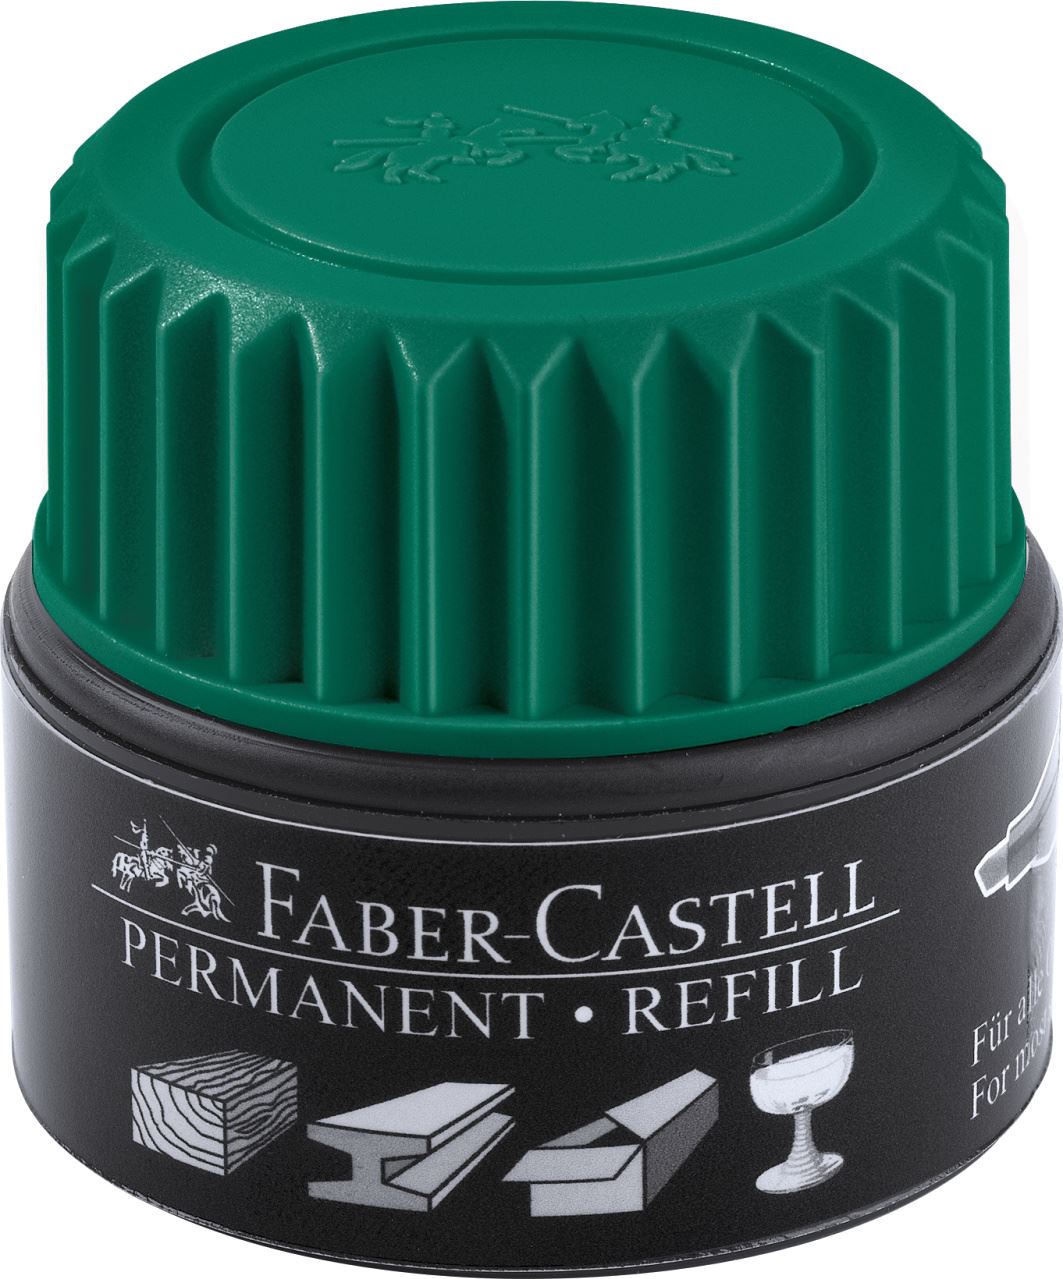 Faber-Castell - Grip refill system, green